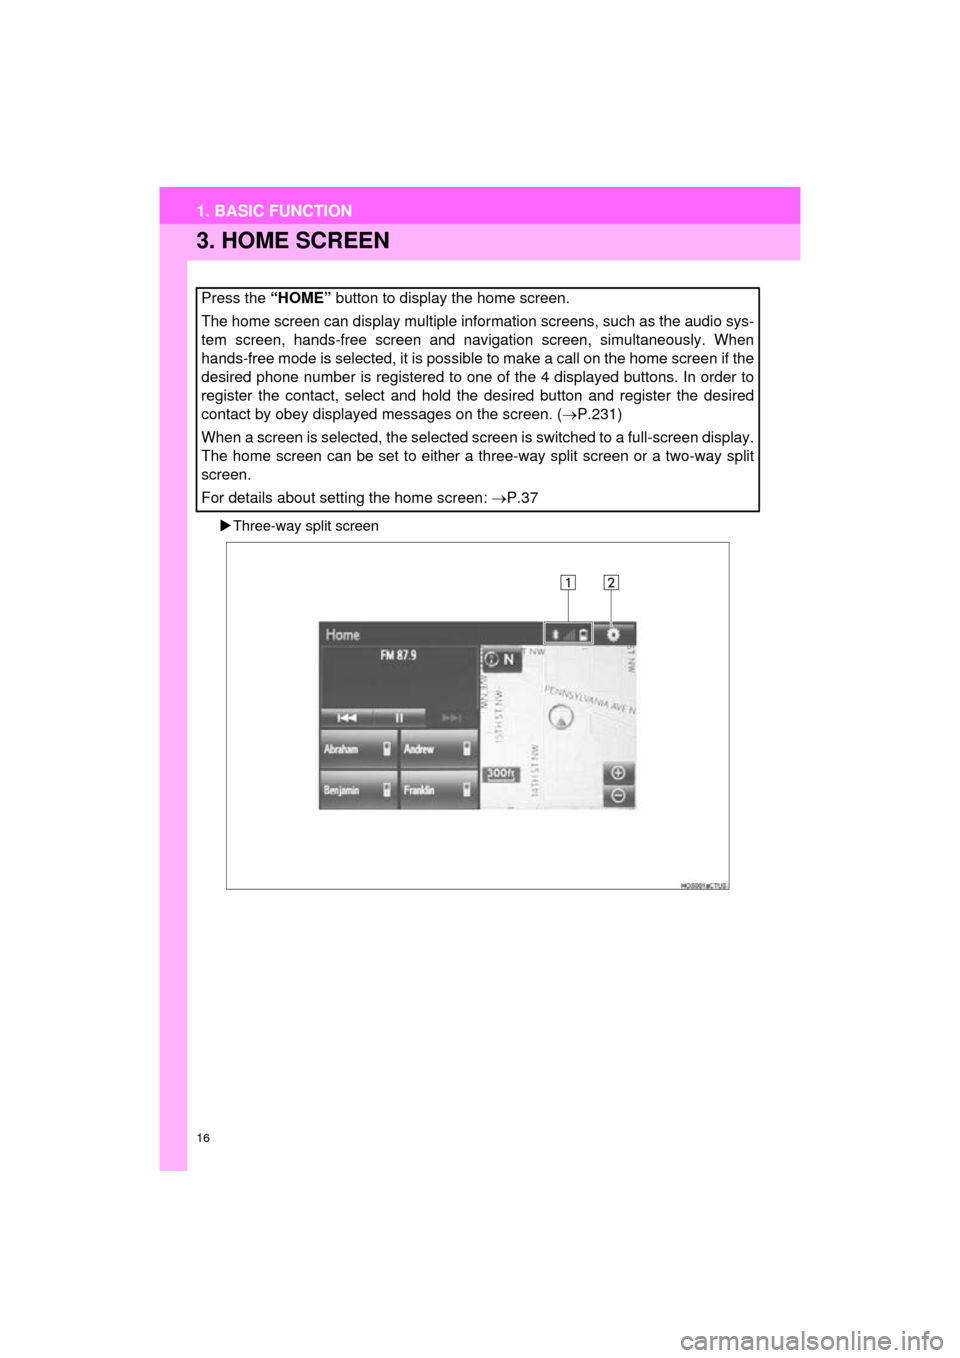 TOYOTA HIGHLANDER 2016 XU50 / 3.G Navigation Manual 16
1. BASIC FUNCTION
HIGHLANDER_Navi_U
3. HOME SCREEN
Three-way split screen
Press the “HOME”  button to display the home screen.
The home screen can display multiple information screens, such 